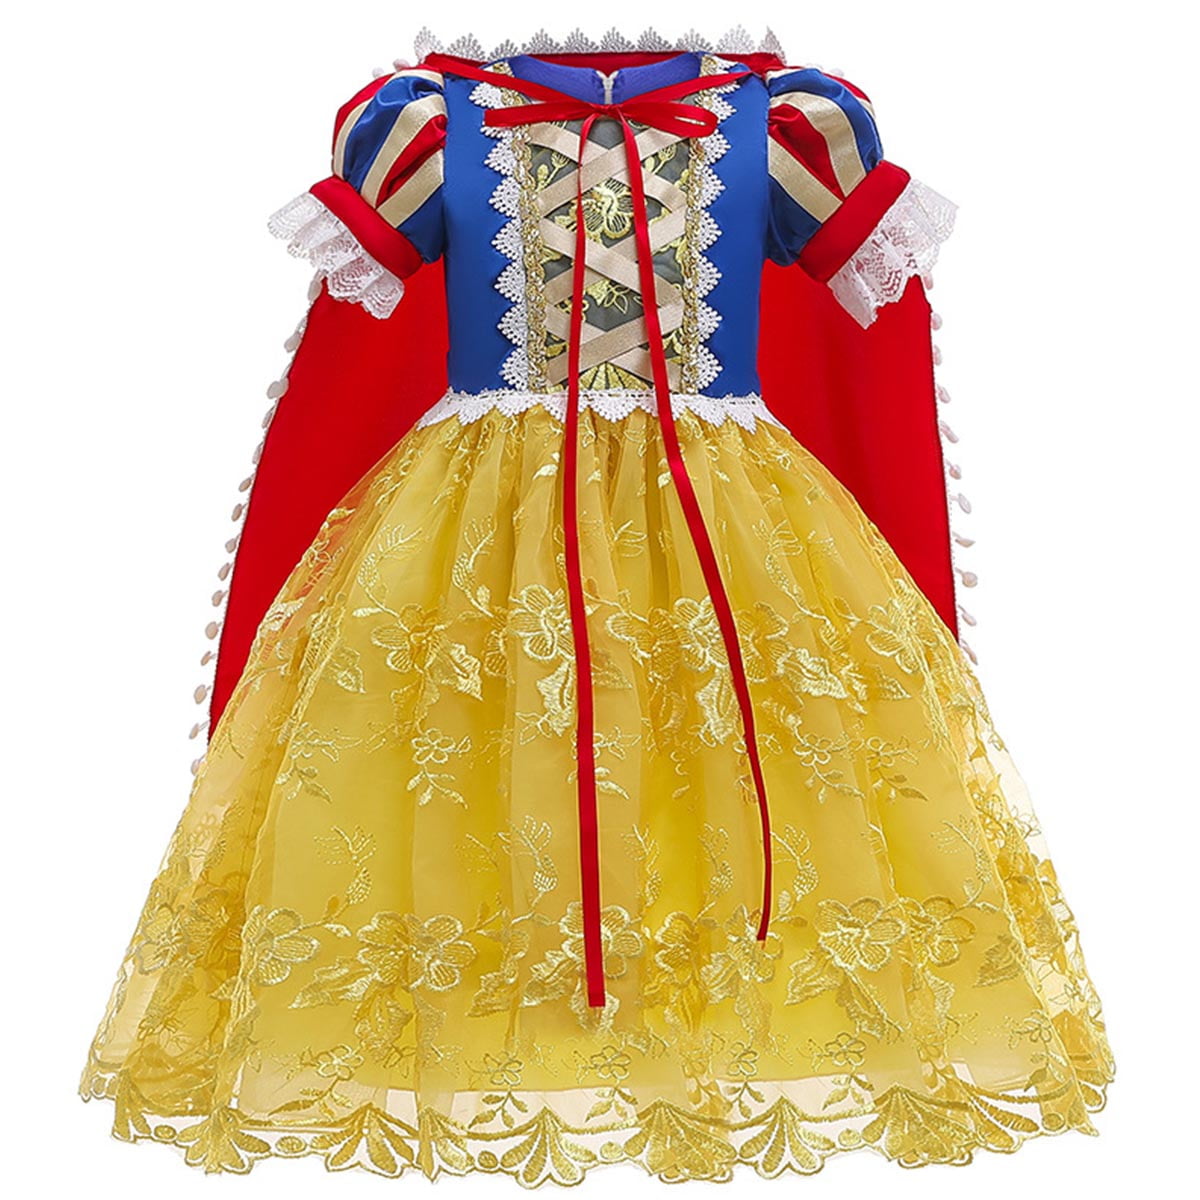 Girls Kids Snow White Princess Dress Kids Cosplay Costume Party Dress Up O67 